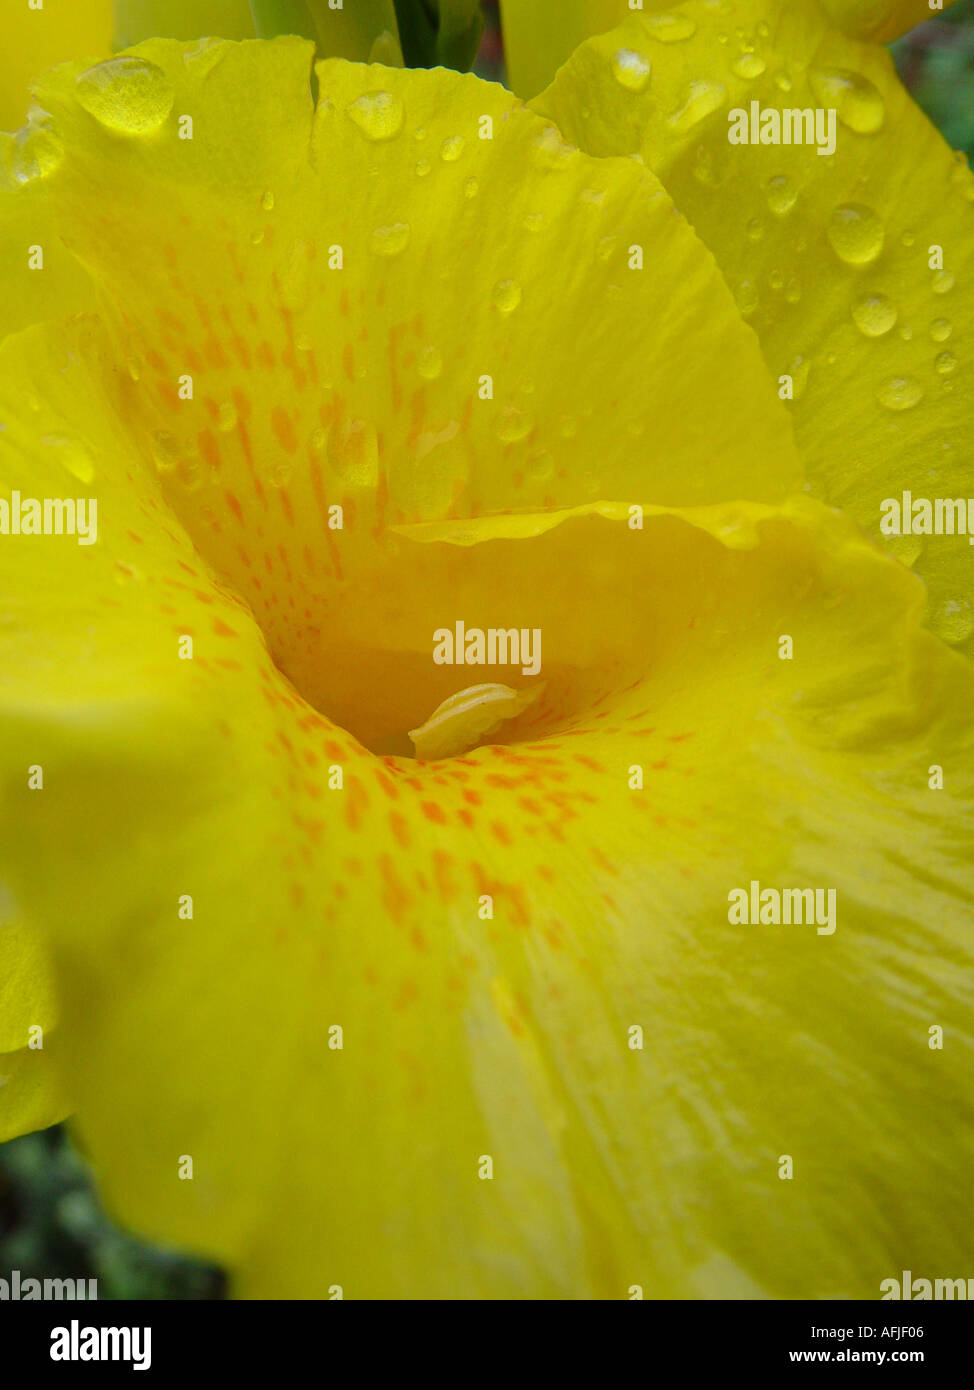 Canna indica yellow flower closeup Indian shot plant Stock Photo